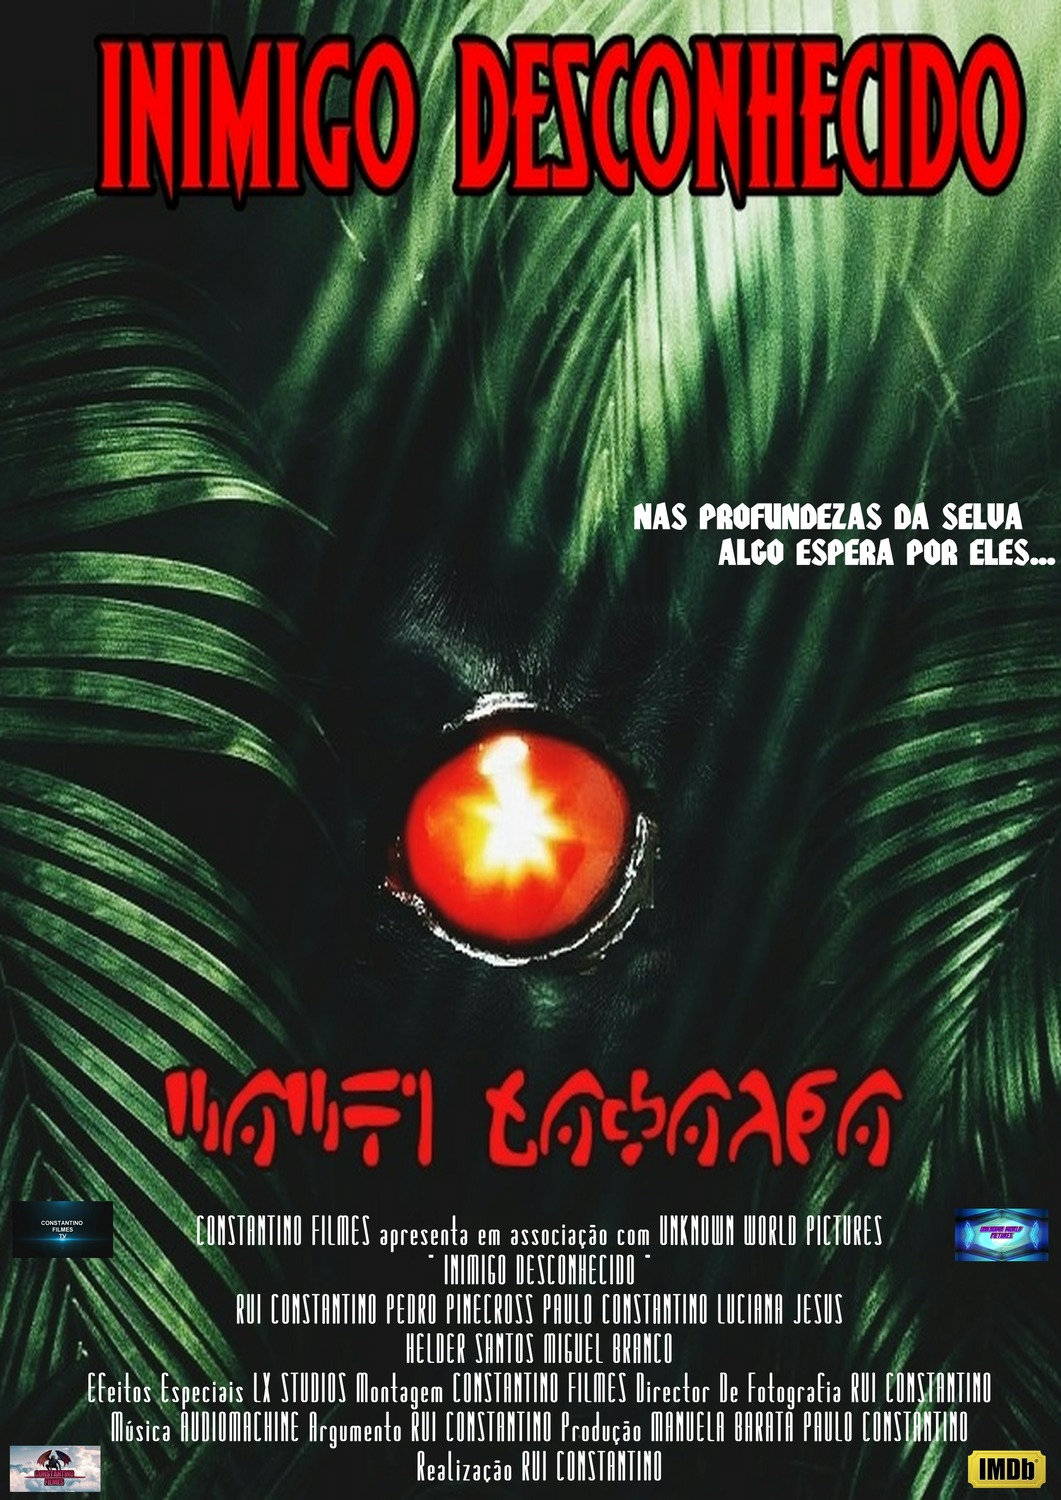 Extra Large Movie Poster Image for Inimigo Desconhecido: Enemy Unknown 